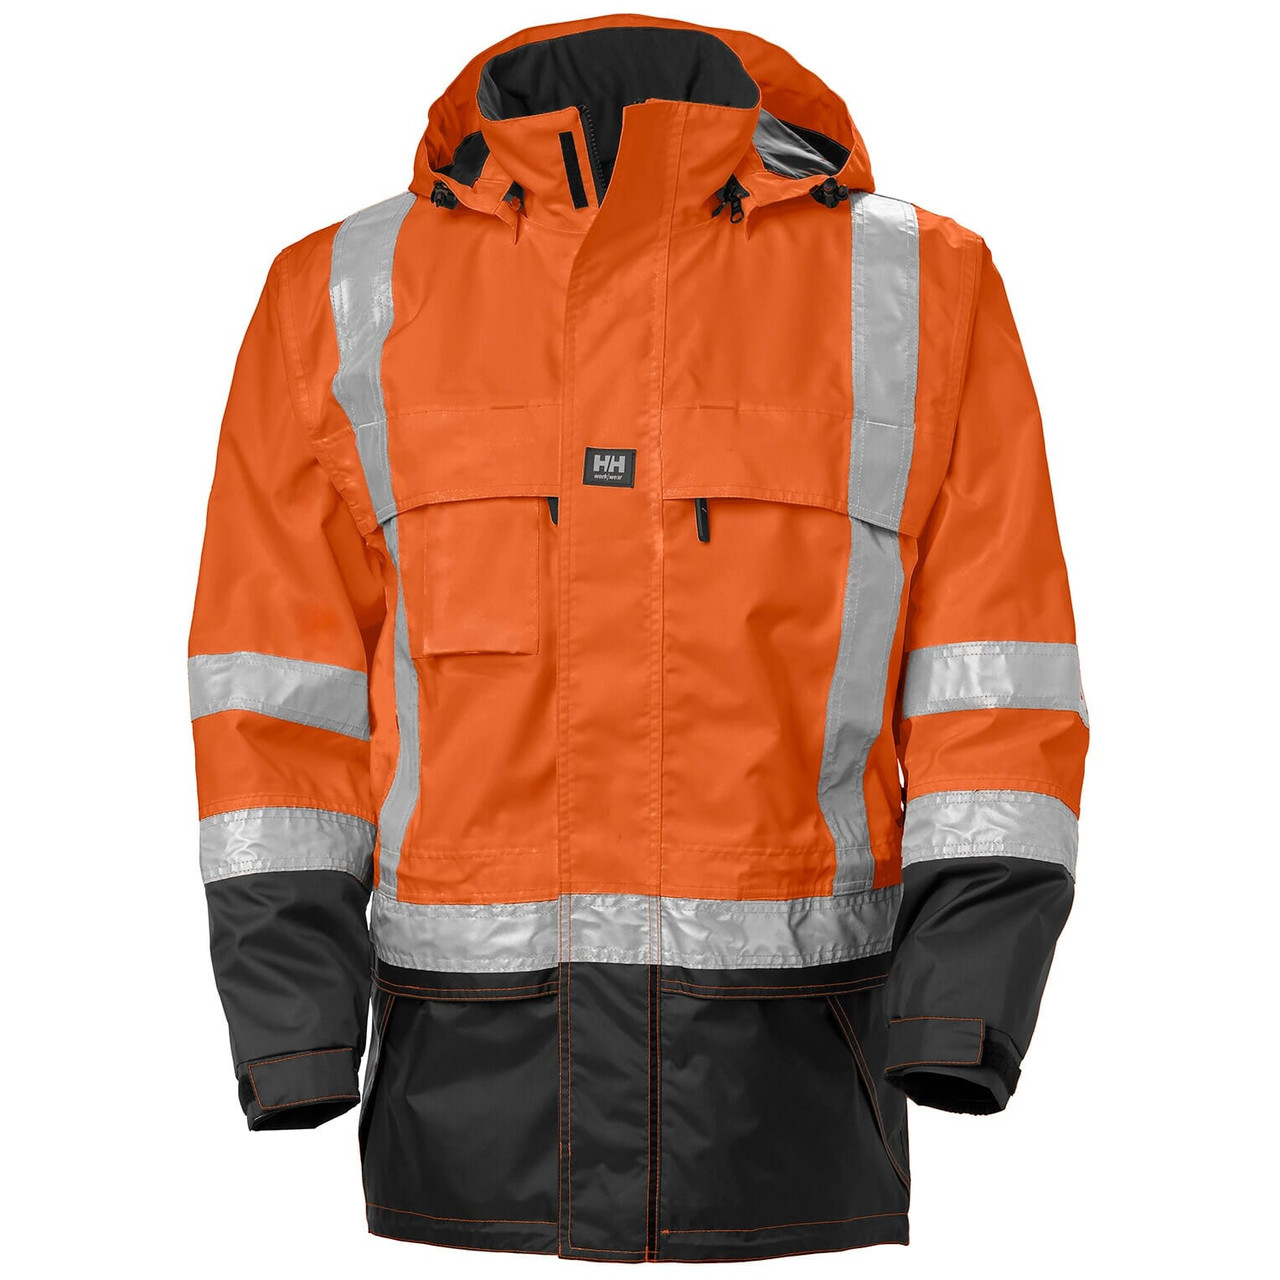 Helly Hansen Work Jacket: Waterproof Windproof Breathable Potsdam  Collection Men's - Western Safety